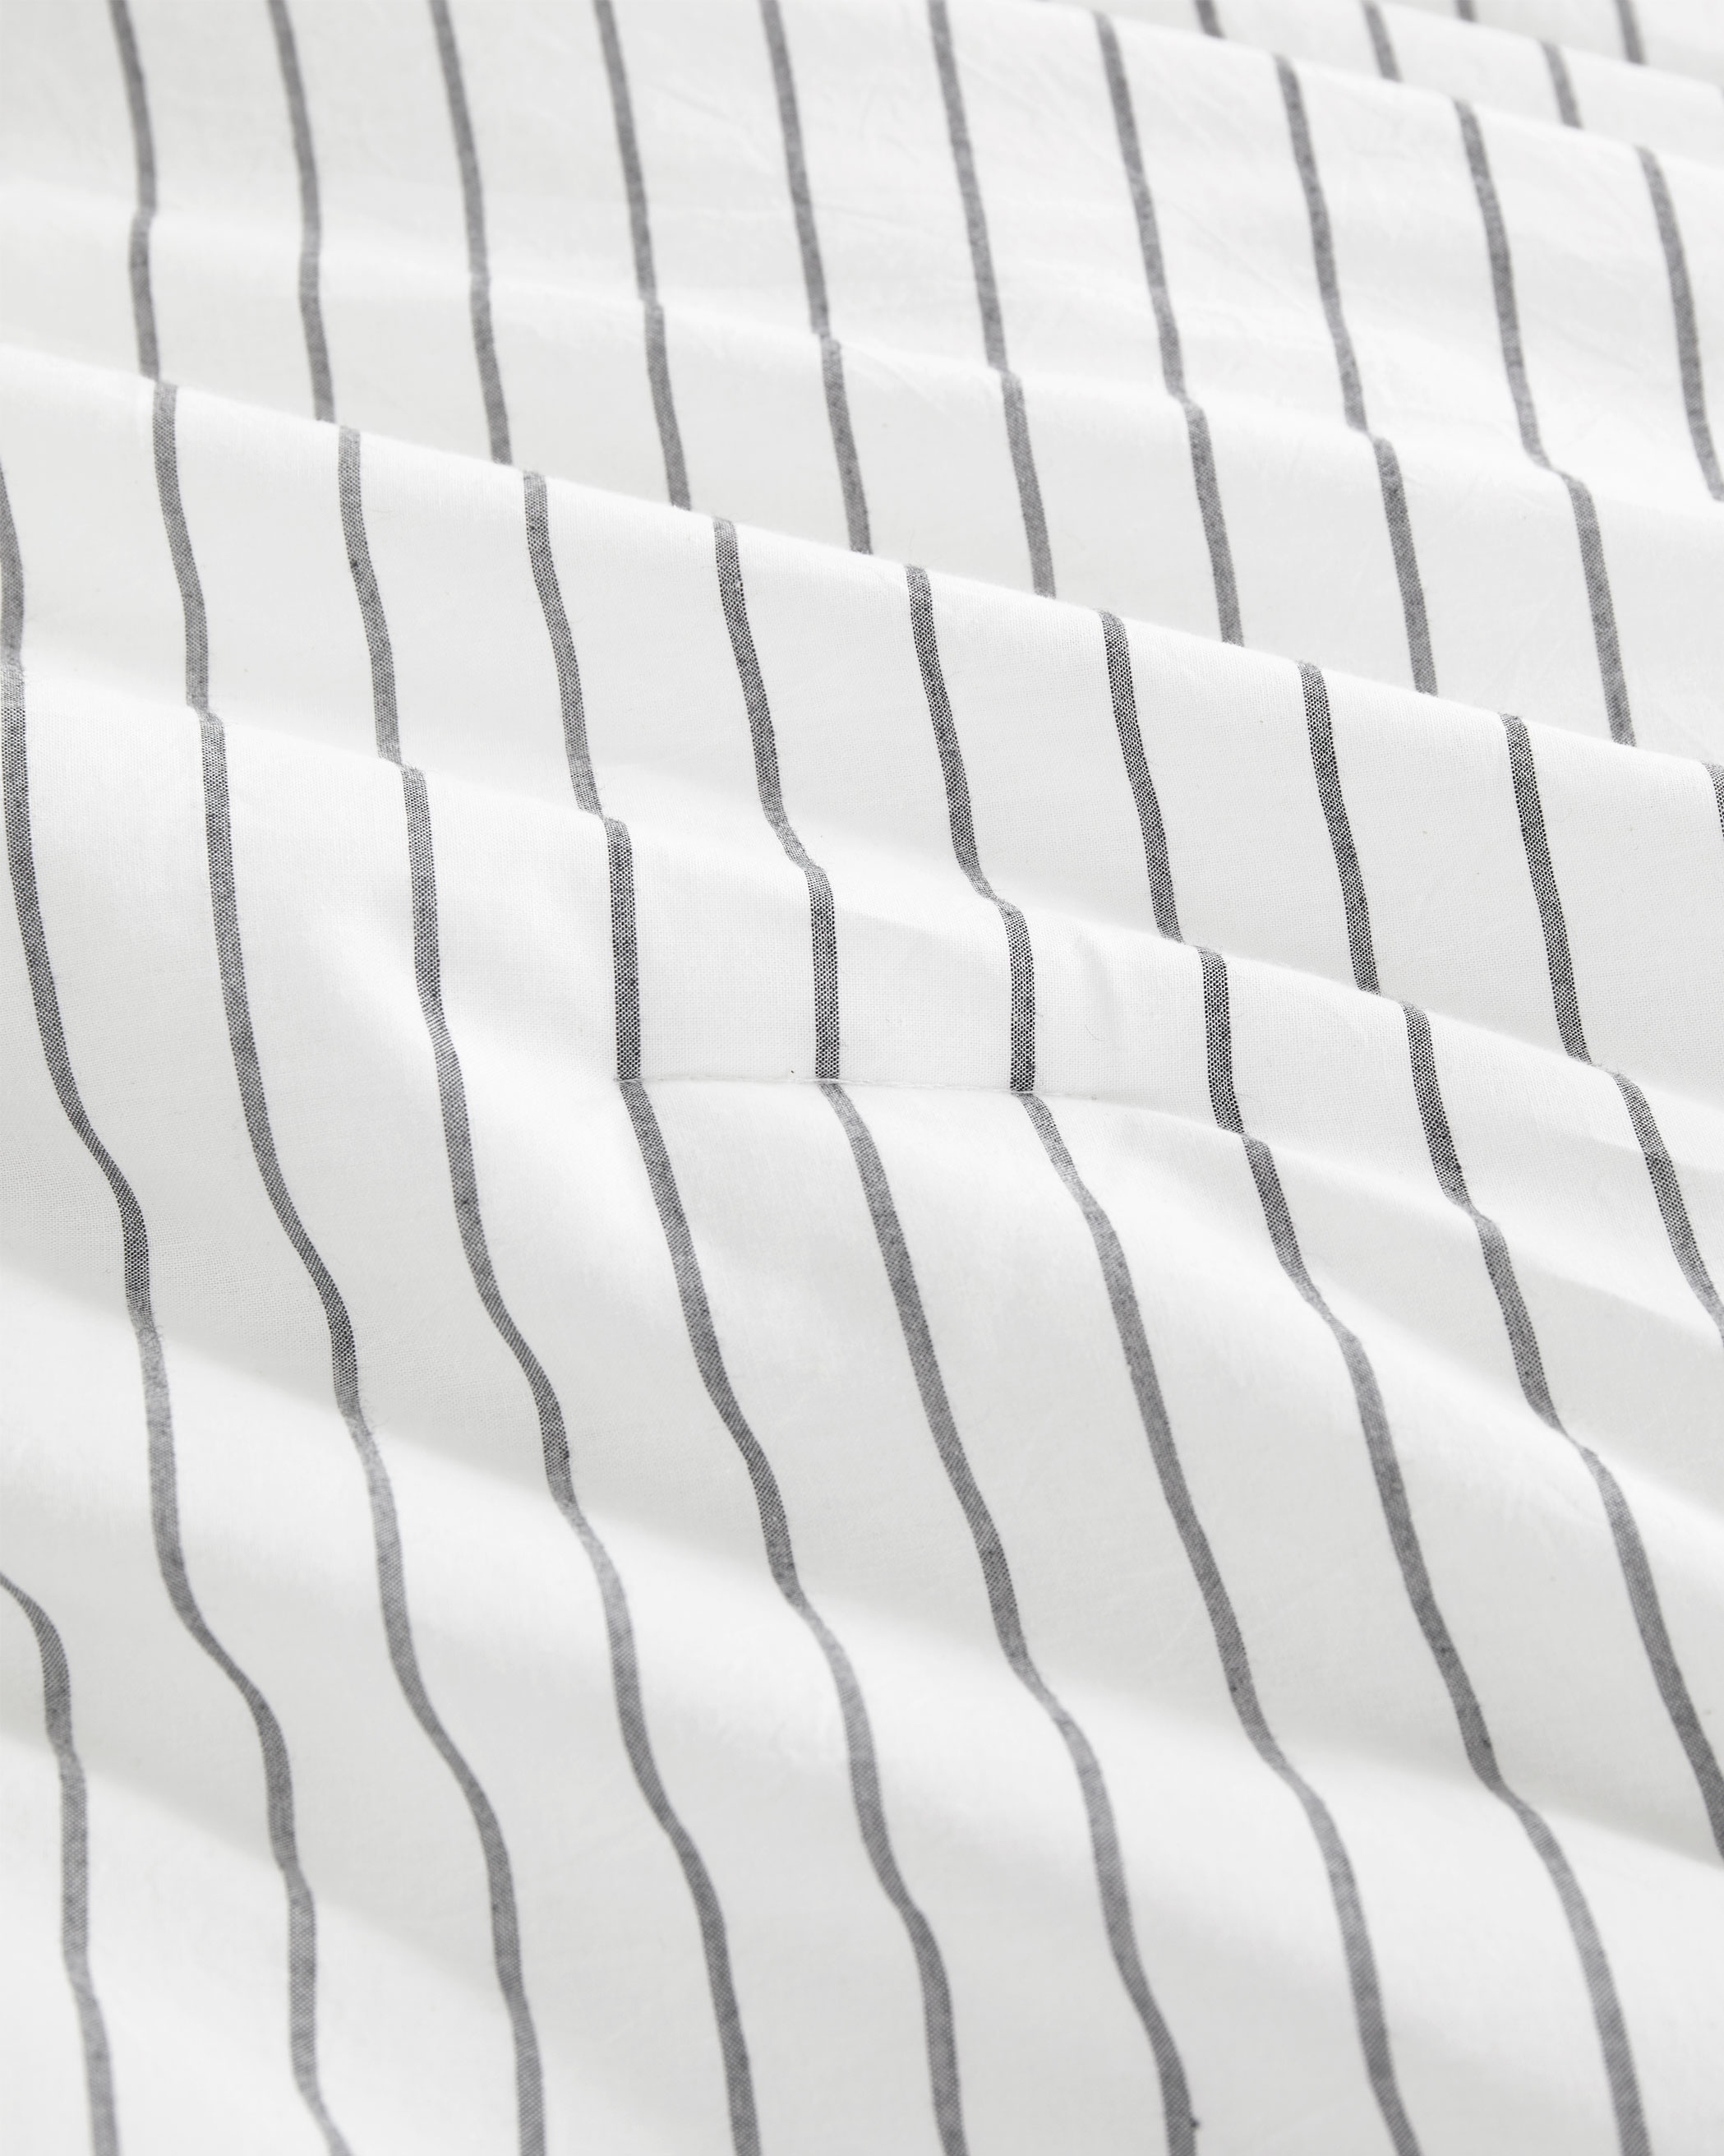 White Striped Washed Cotton Comforter Set